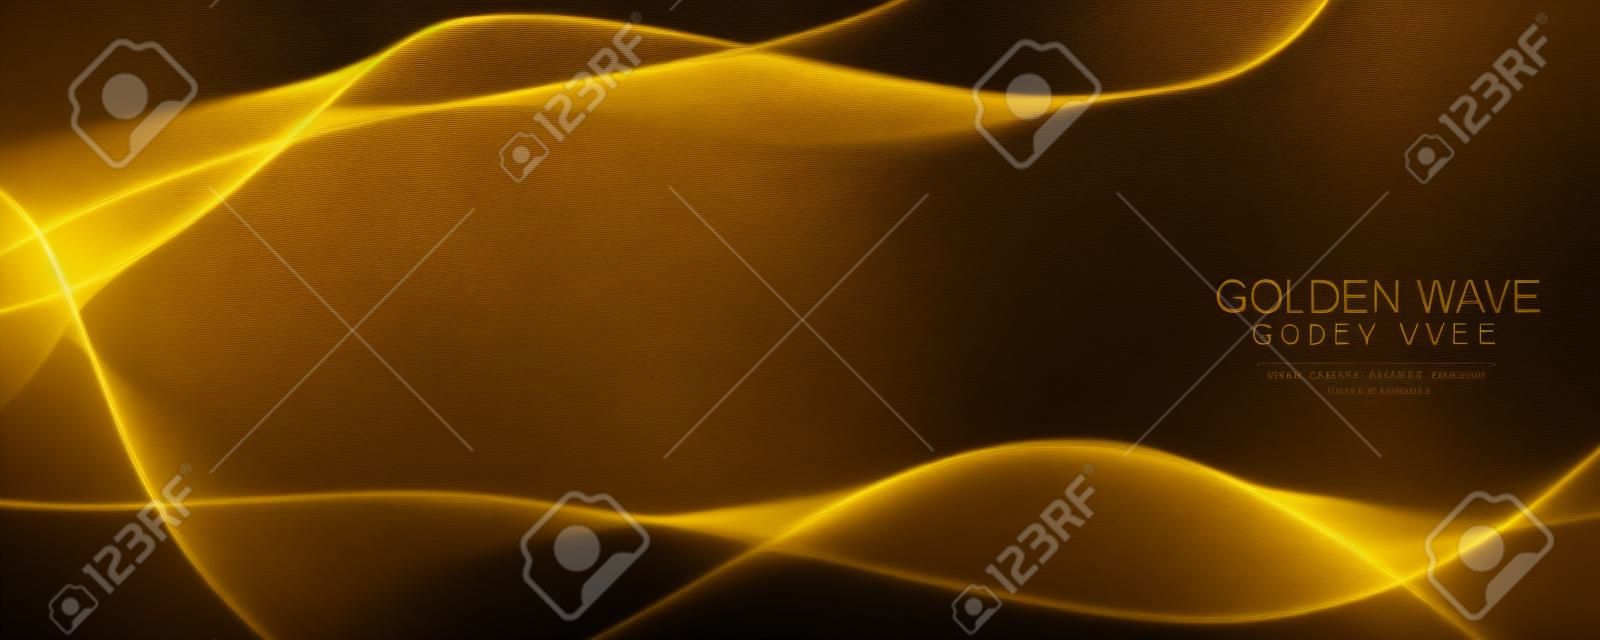 Diseño de ondas doradas de lujo sobre fondo negro